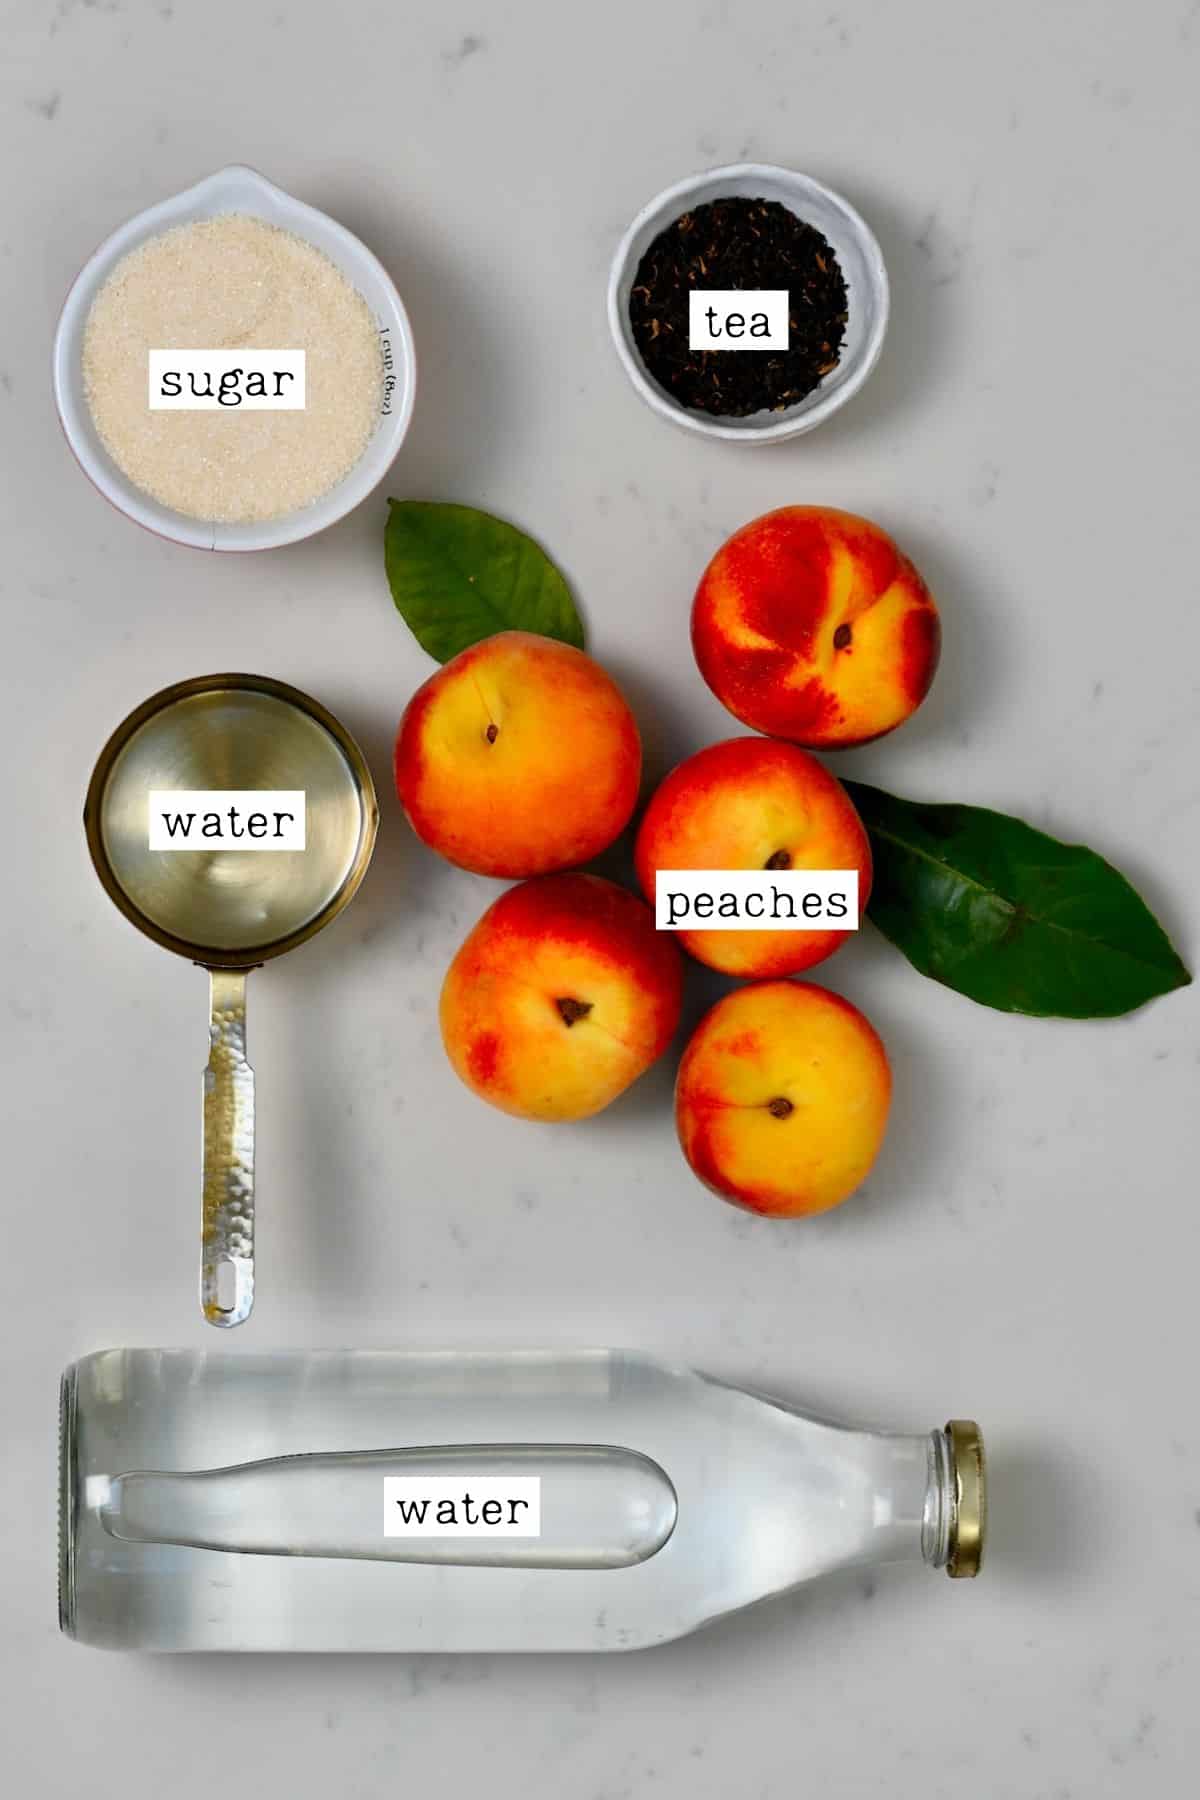 Peach Iced Tea Recipe: How to Make Peach Iced Tea Recipe